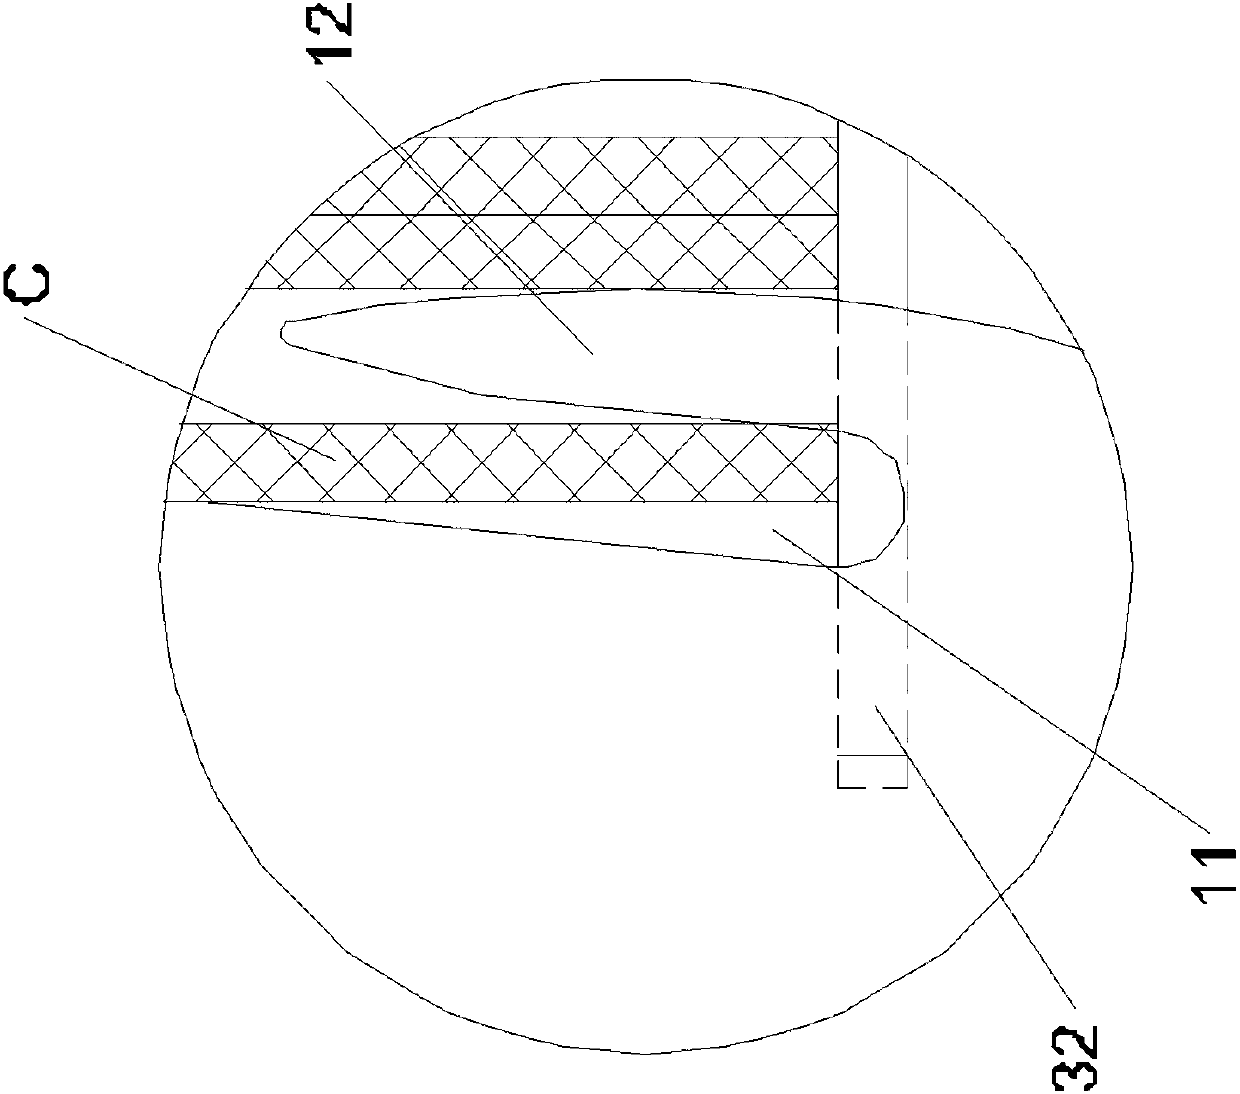 Equi-index plate arraying mechanism